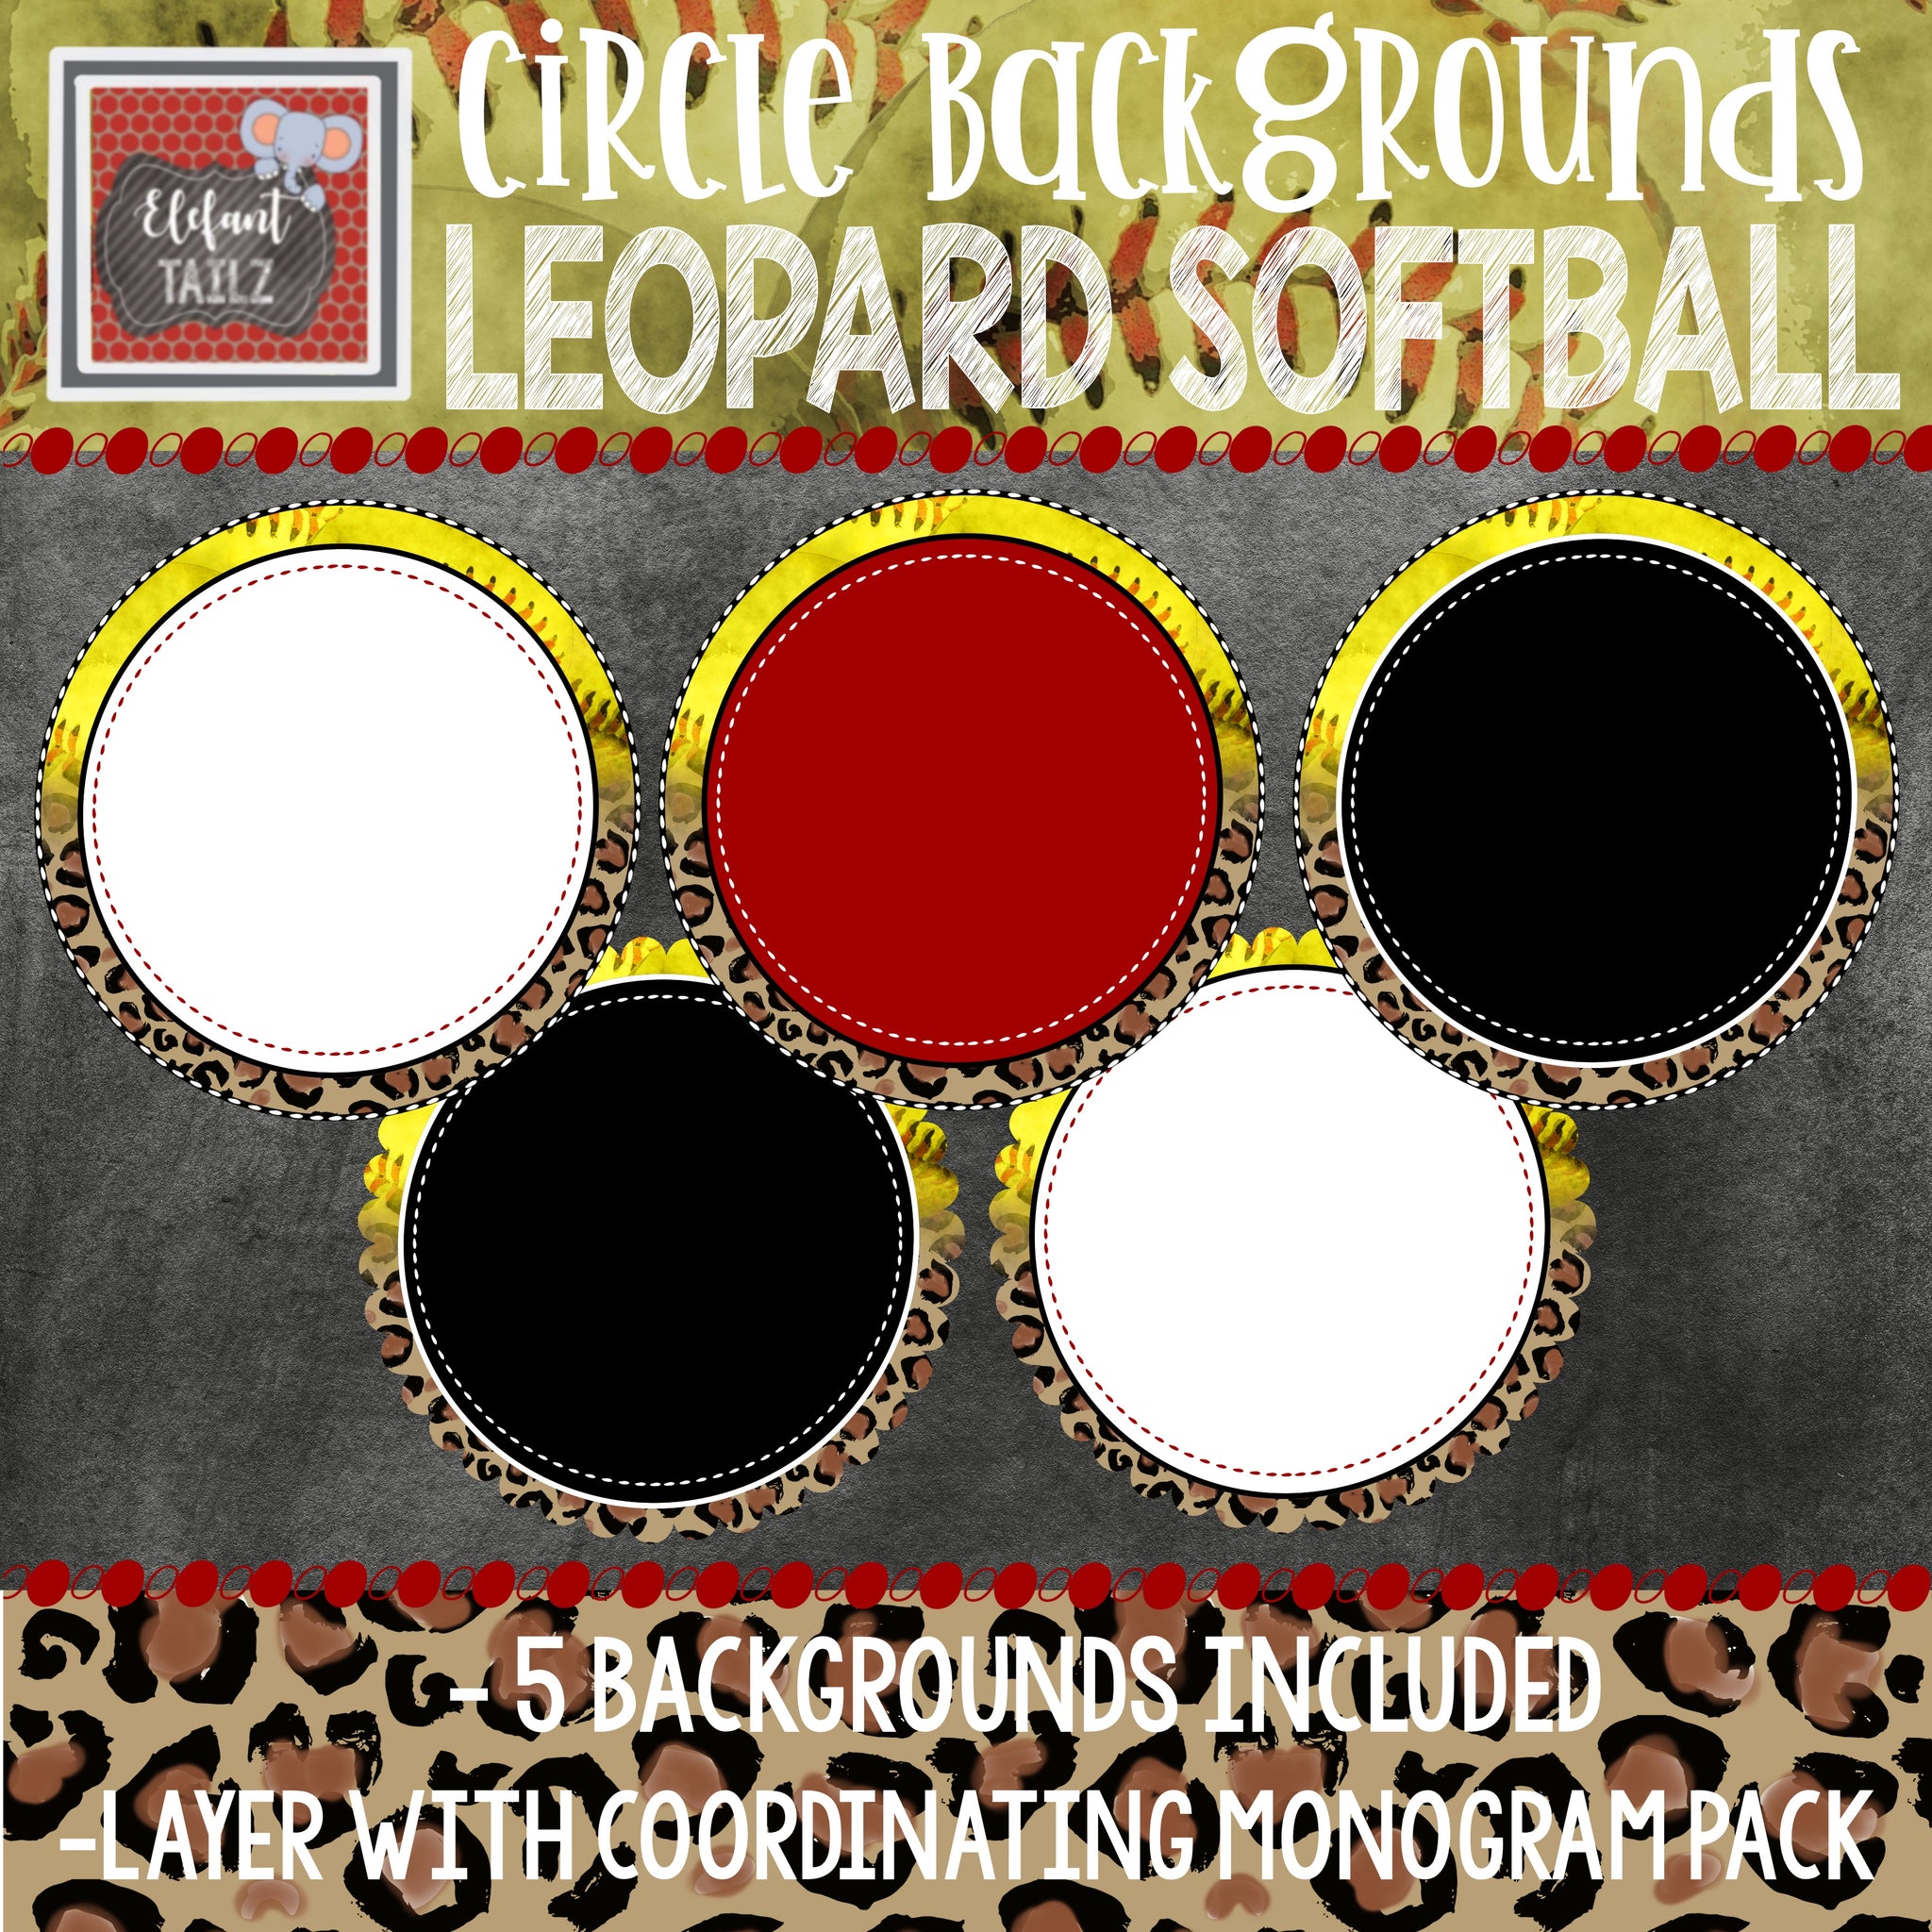 Softball Leopard Circle Backgrounds